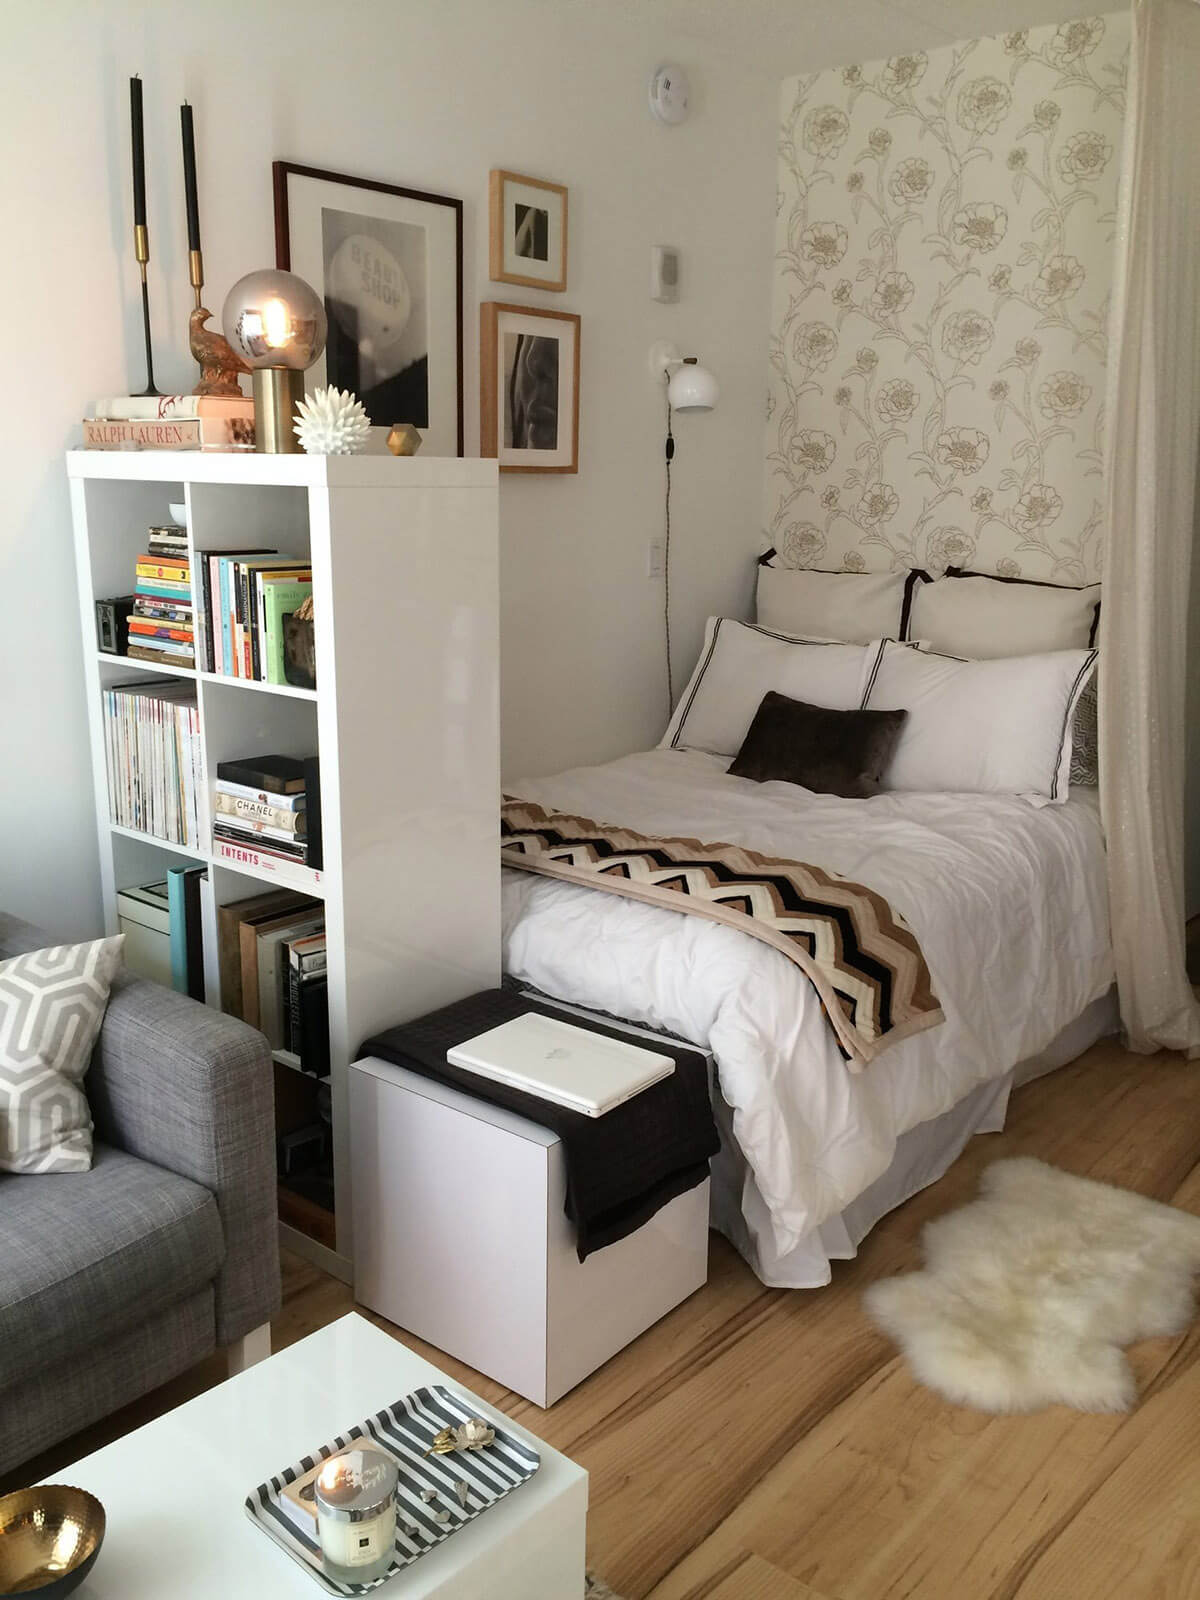 Very small single bedroom ideas